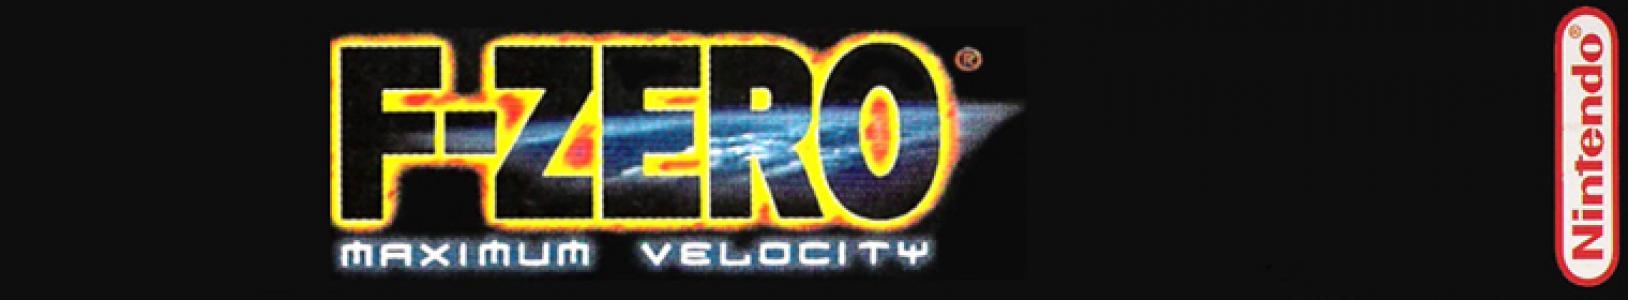 F-Zero: Maximum Velocity banner